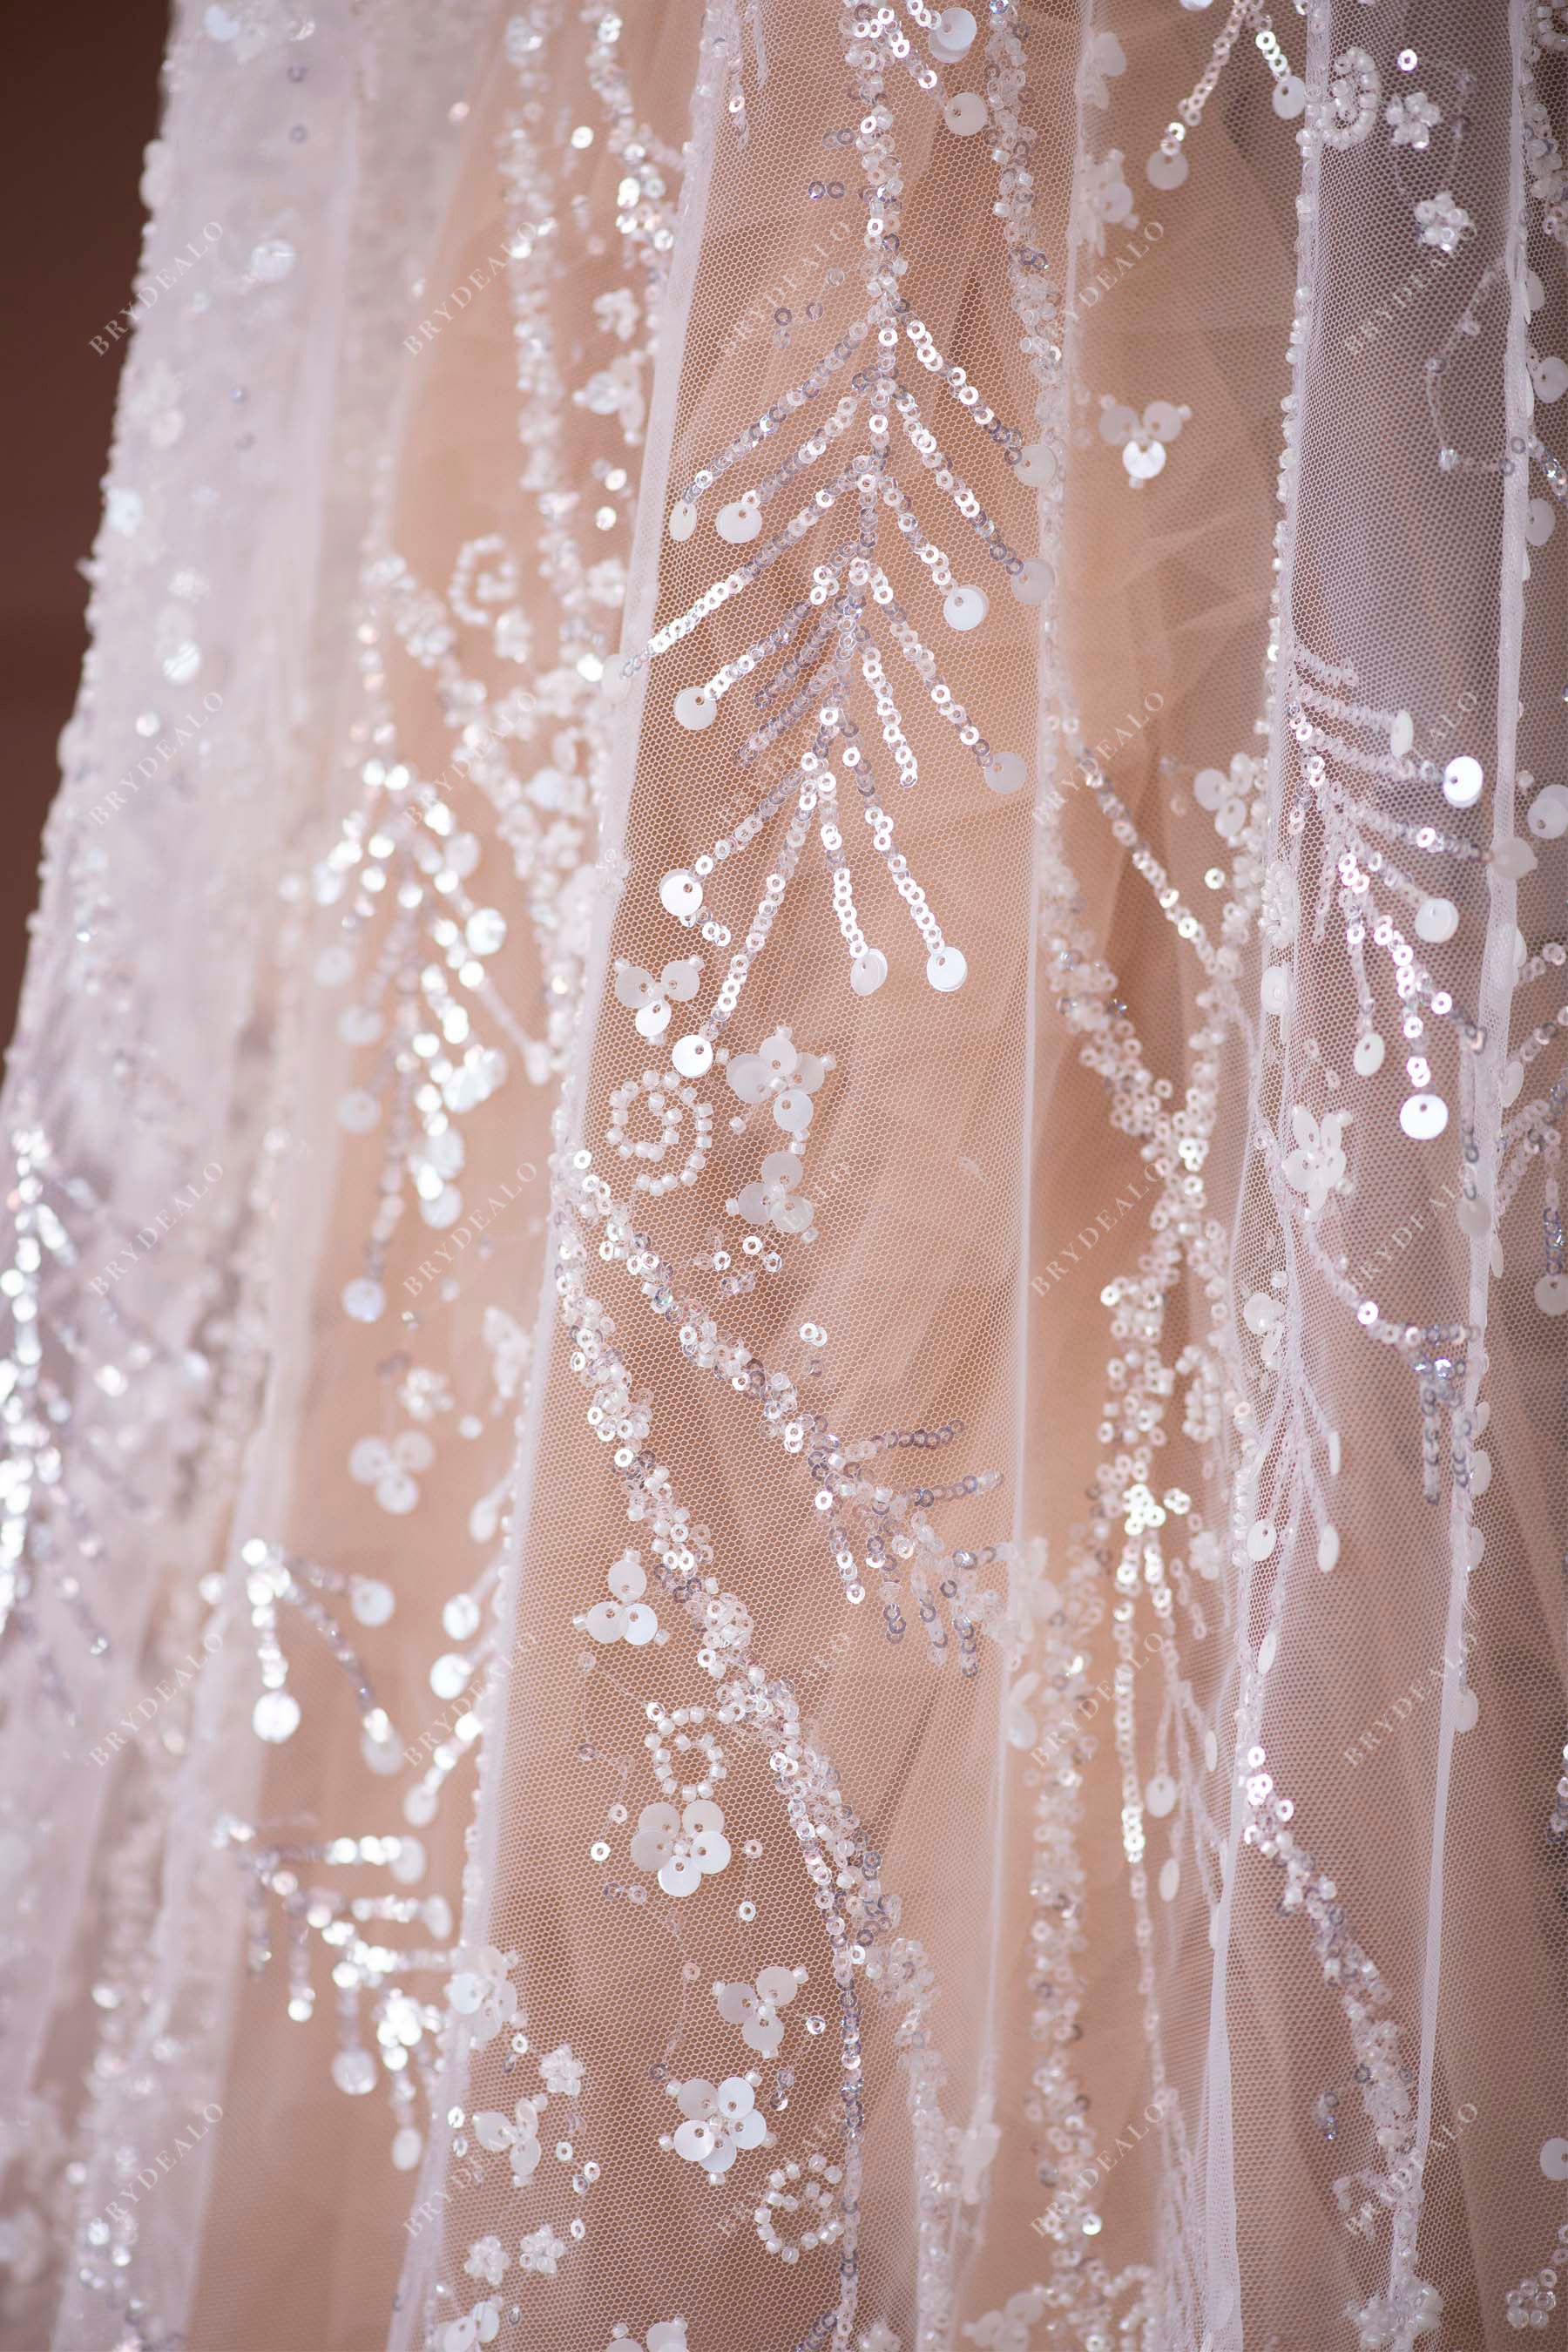 best sparkling designer sequined lace fabric